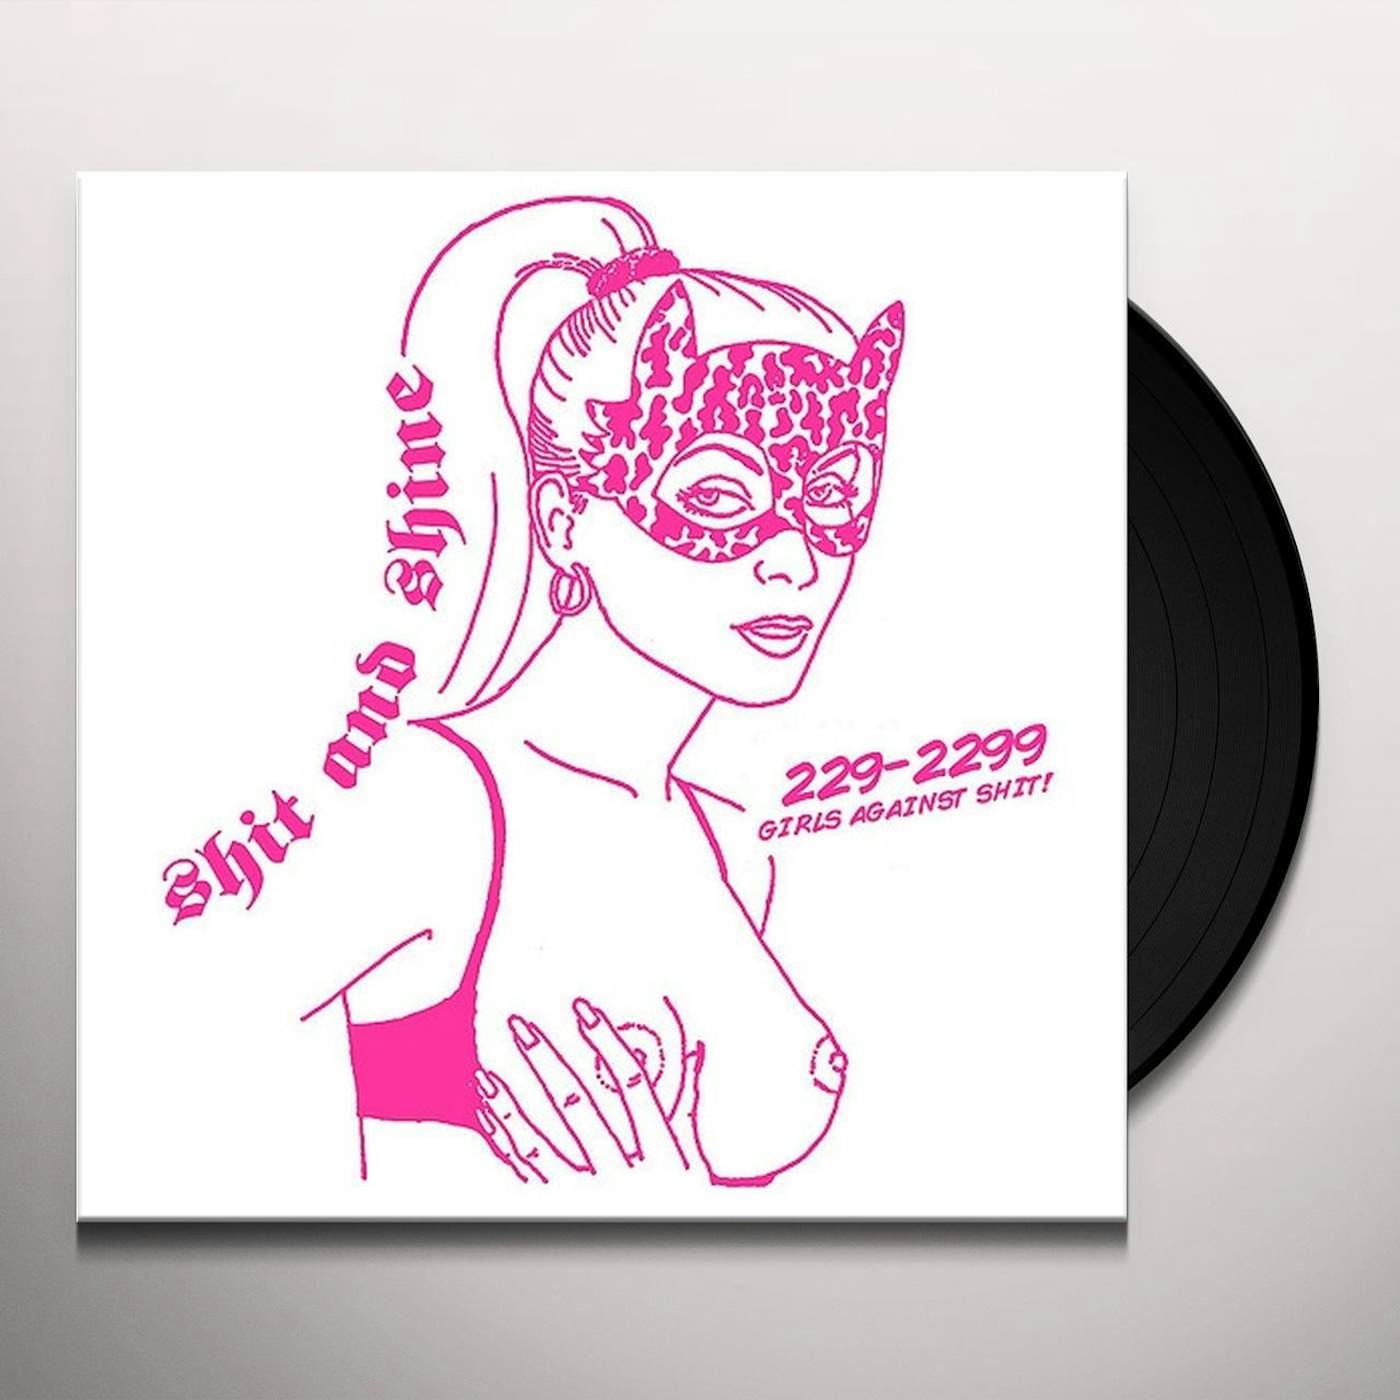 Shit And Shine GIRLS AGAINST SHIT Vinyl Record